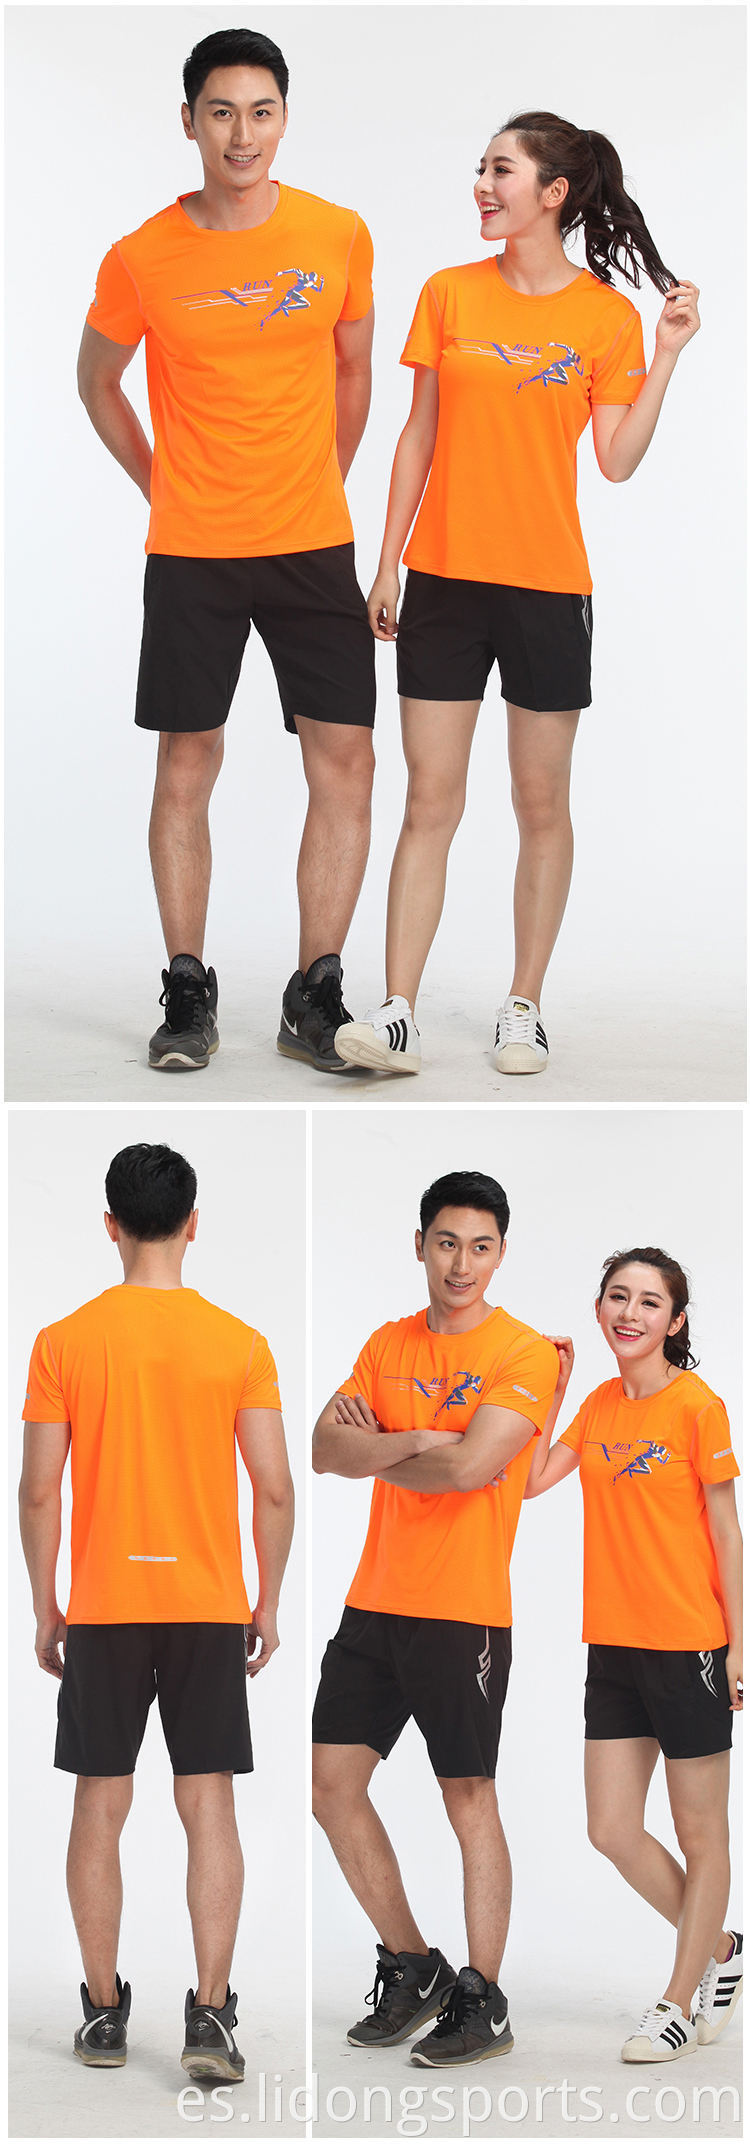 Camiseta de China de China barata Logotipo personalizado Hombres Sport Camiseta impresa